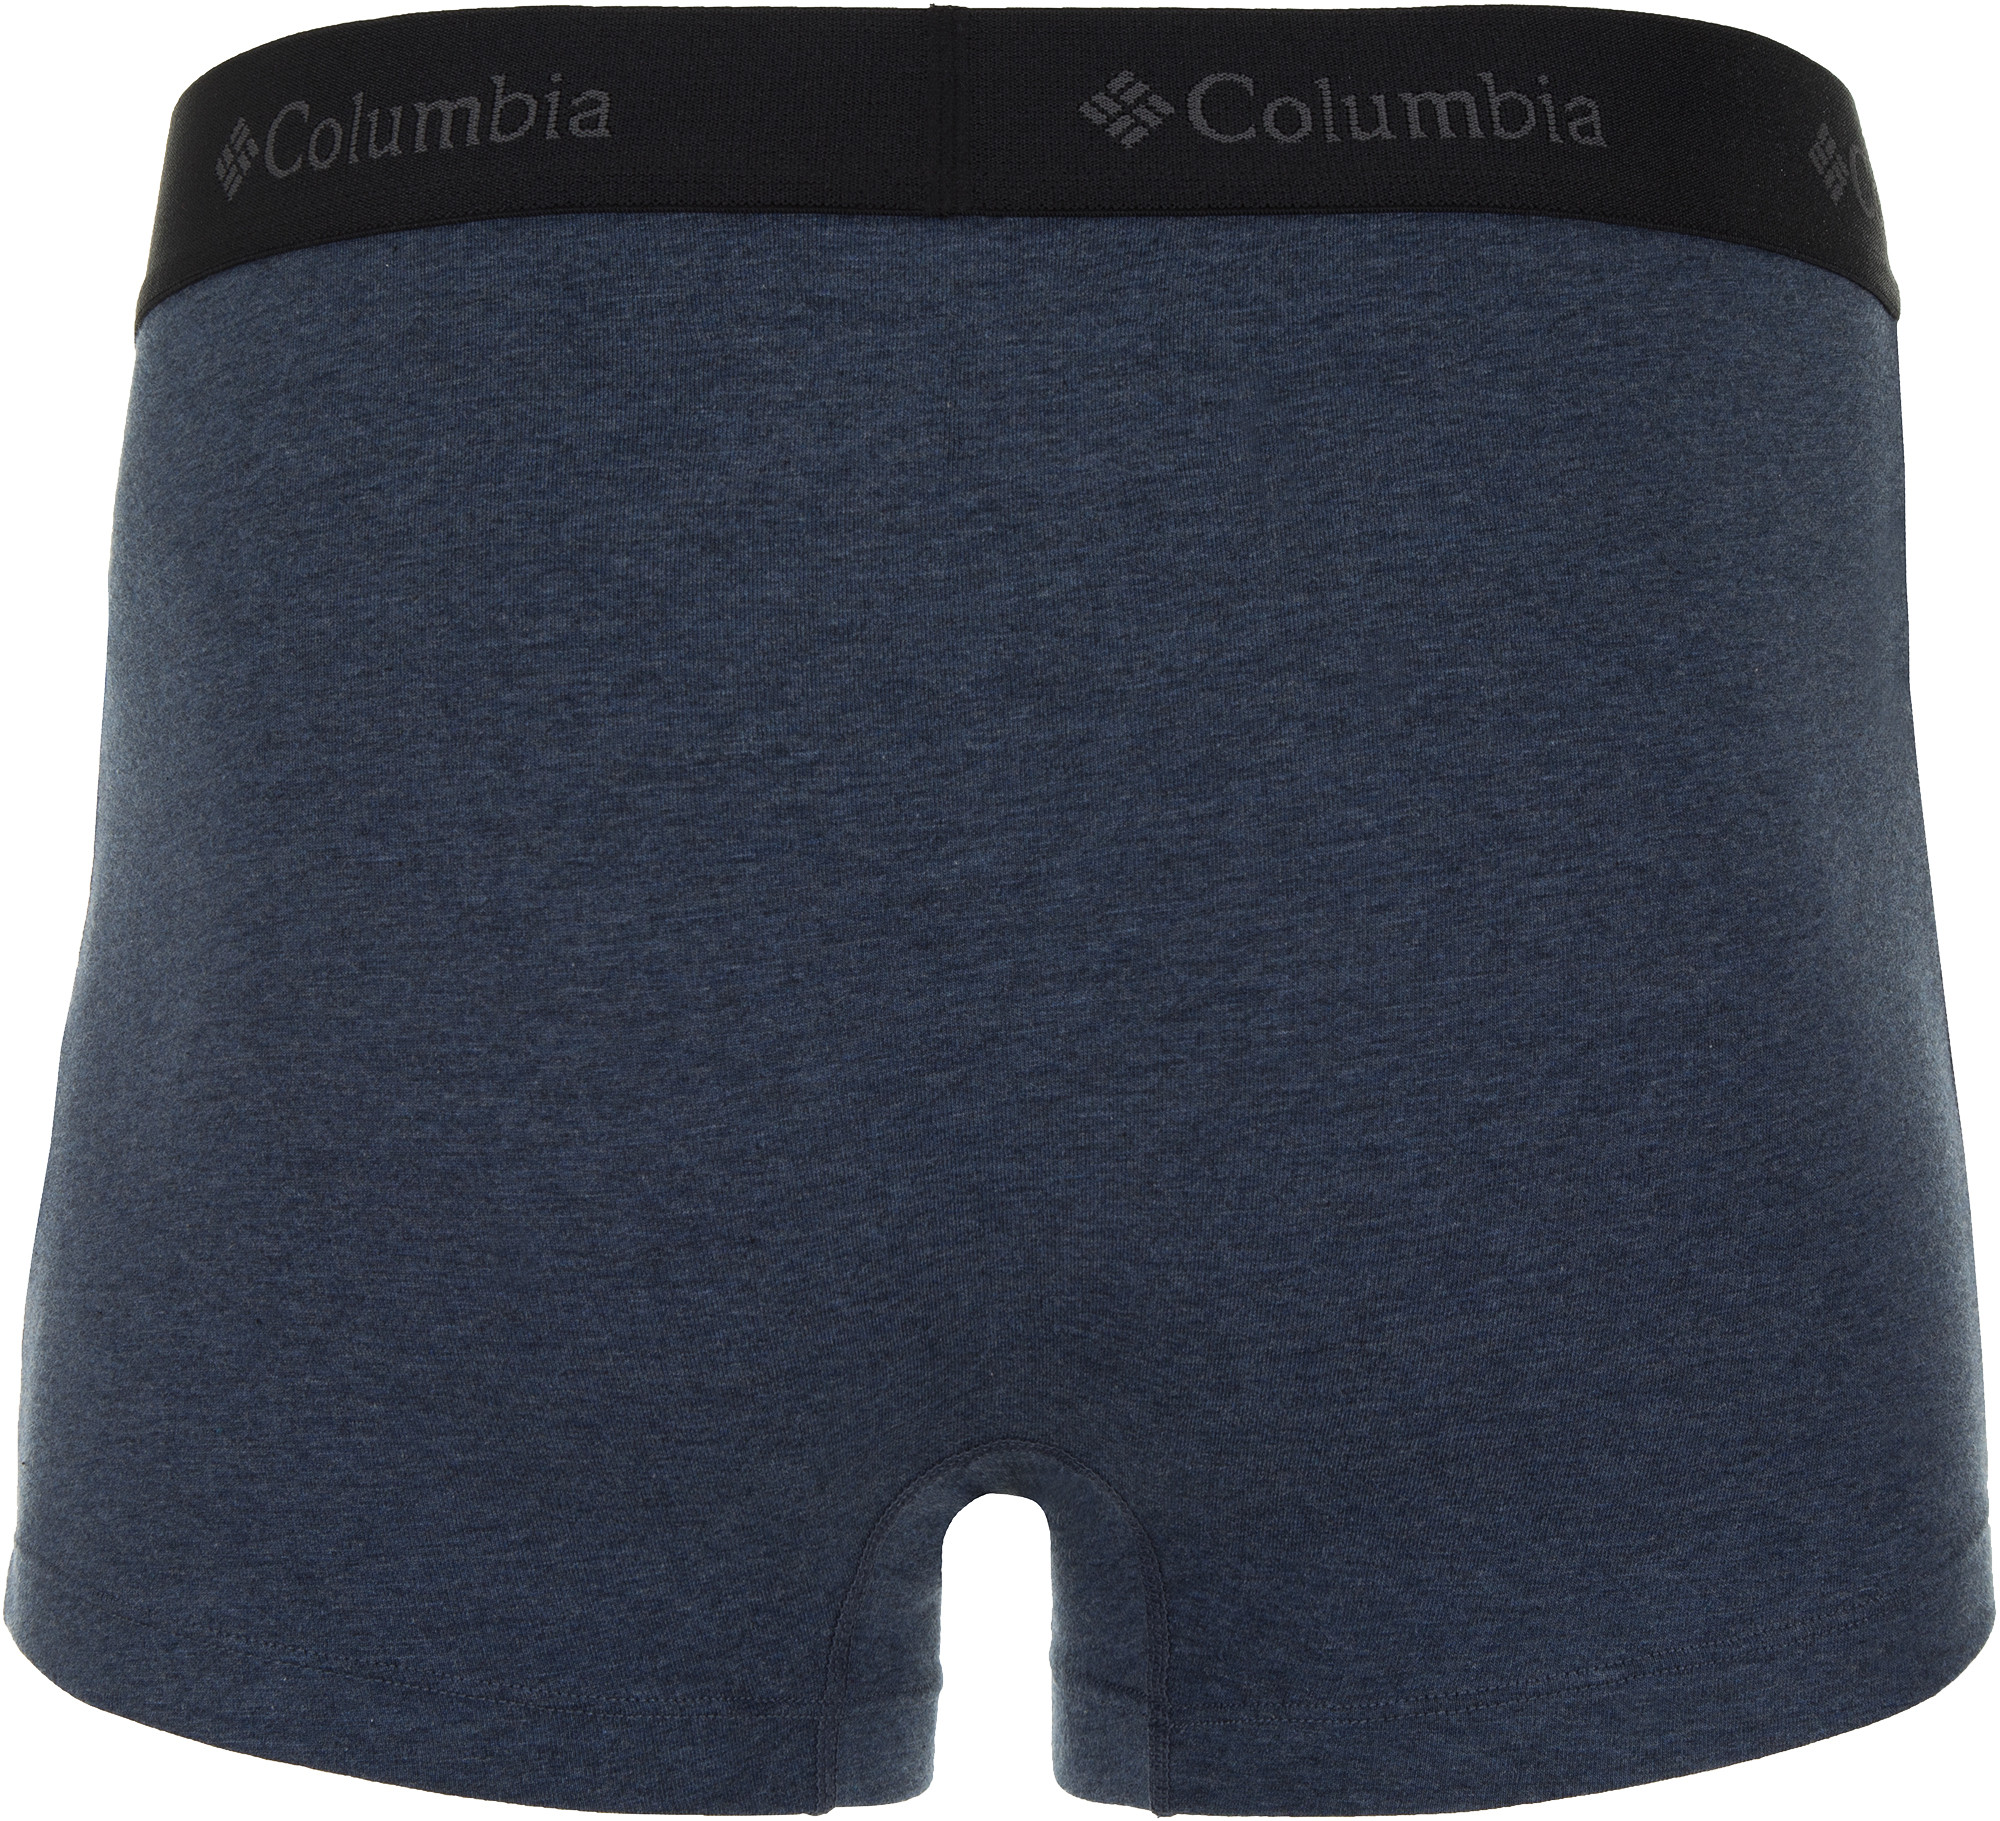 Трусы мужские Columbia SMU Cotton/Stretch, 1 штука